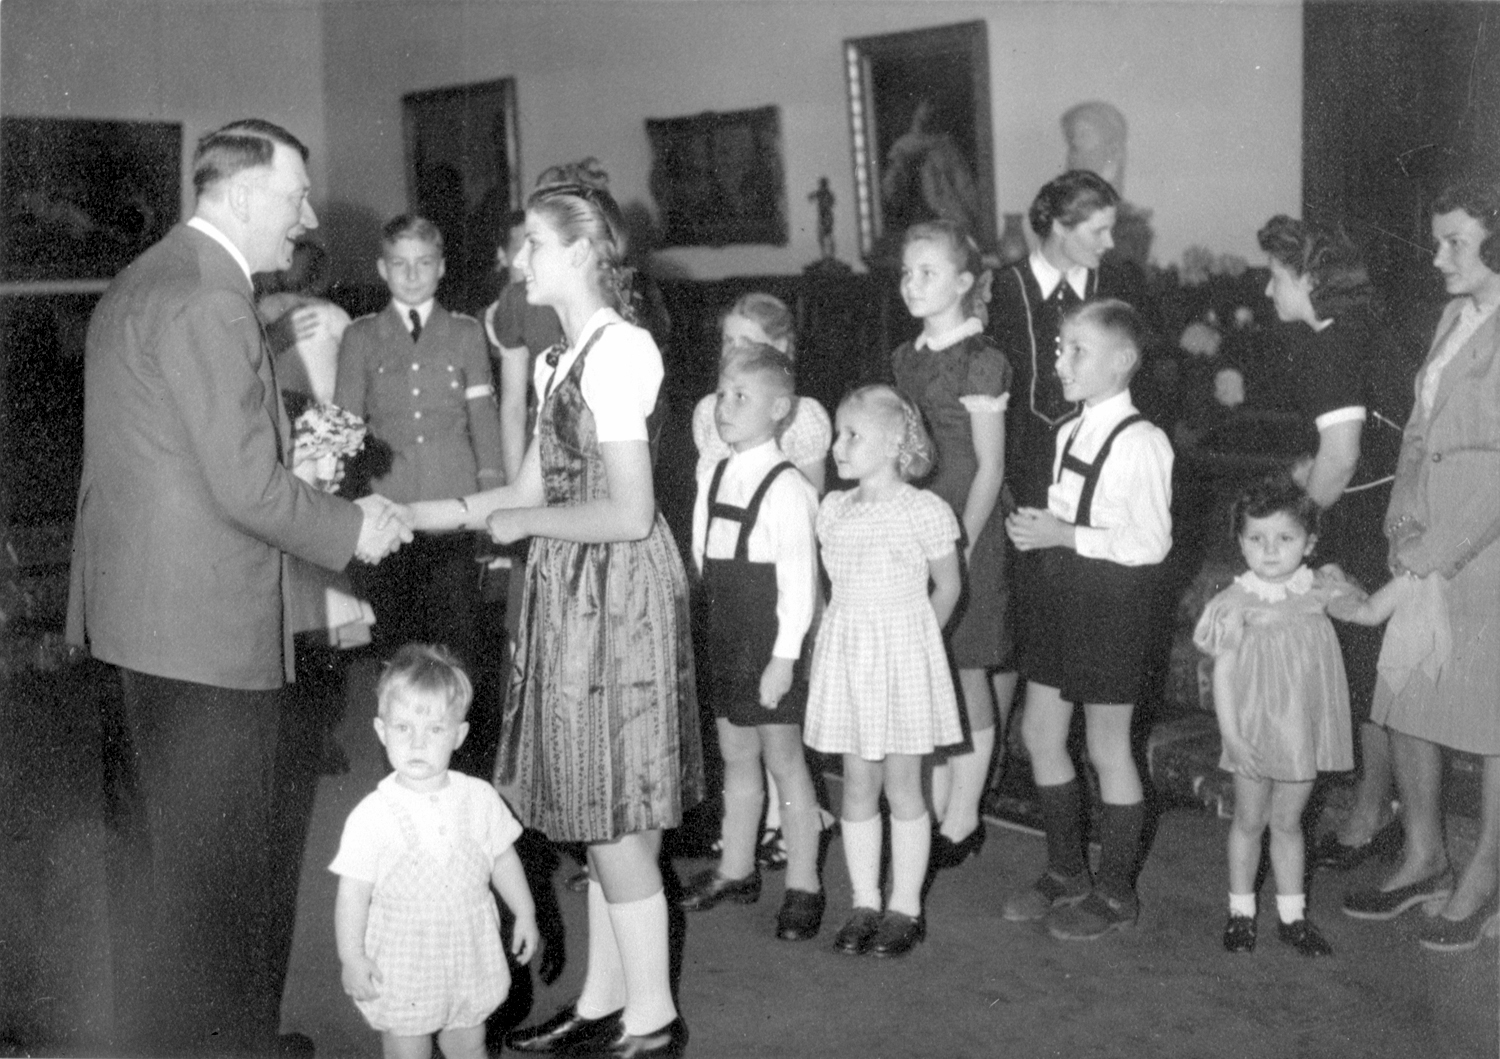 Adolf Hitler birthday celebration at the Berghof, from Eva Braun's albums